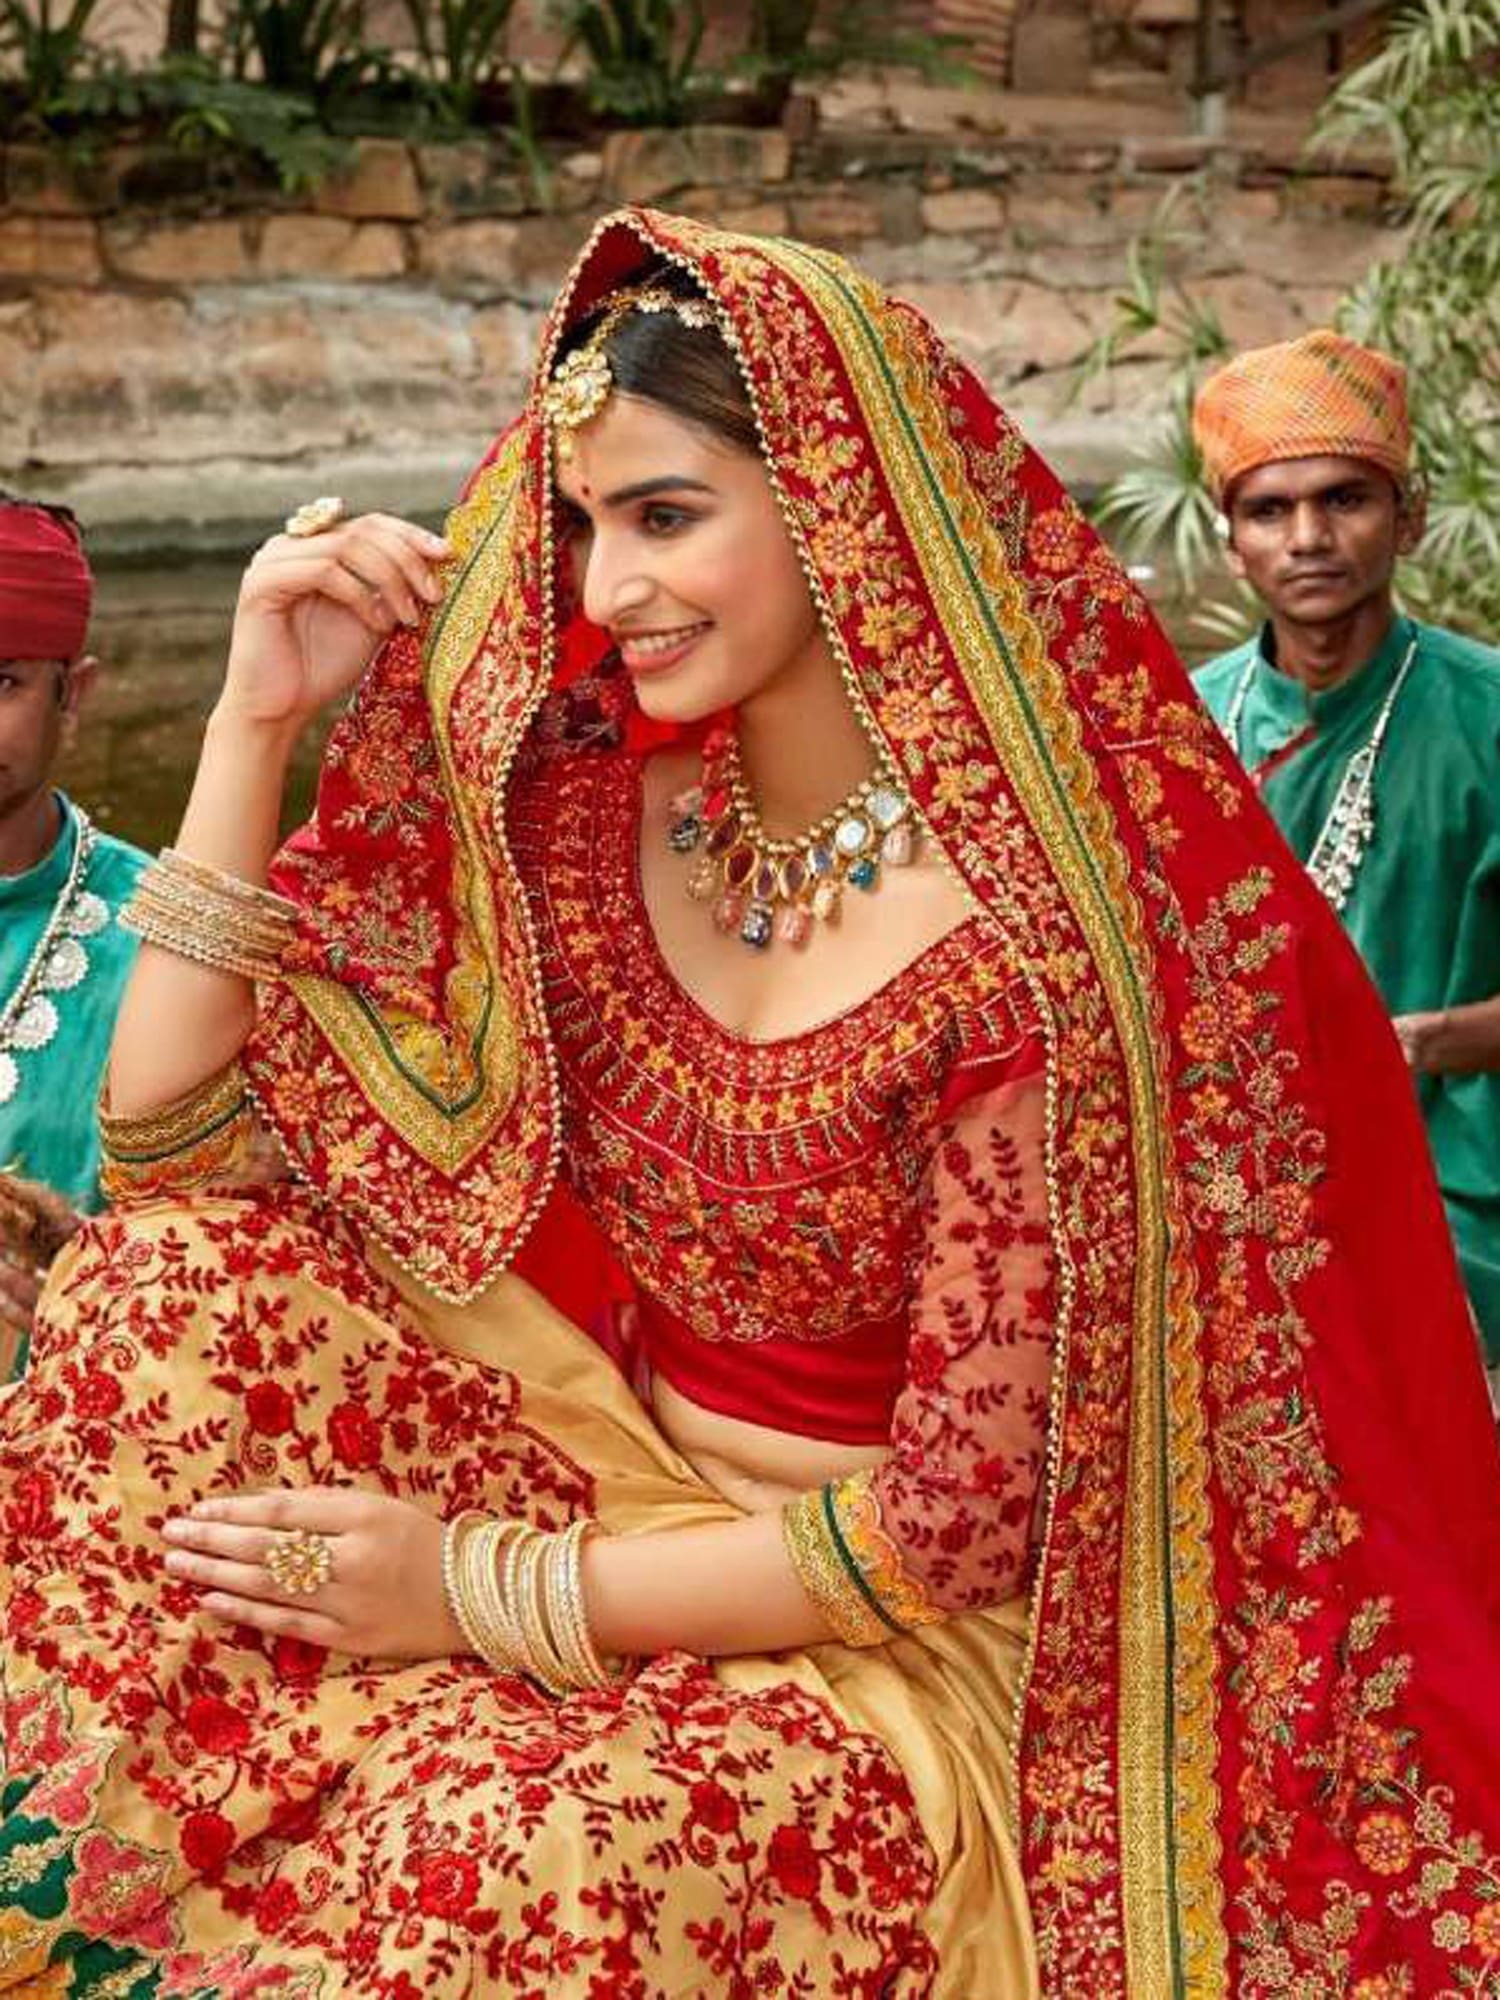 Indian Wedding Lehenga Dress Designs for Brides